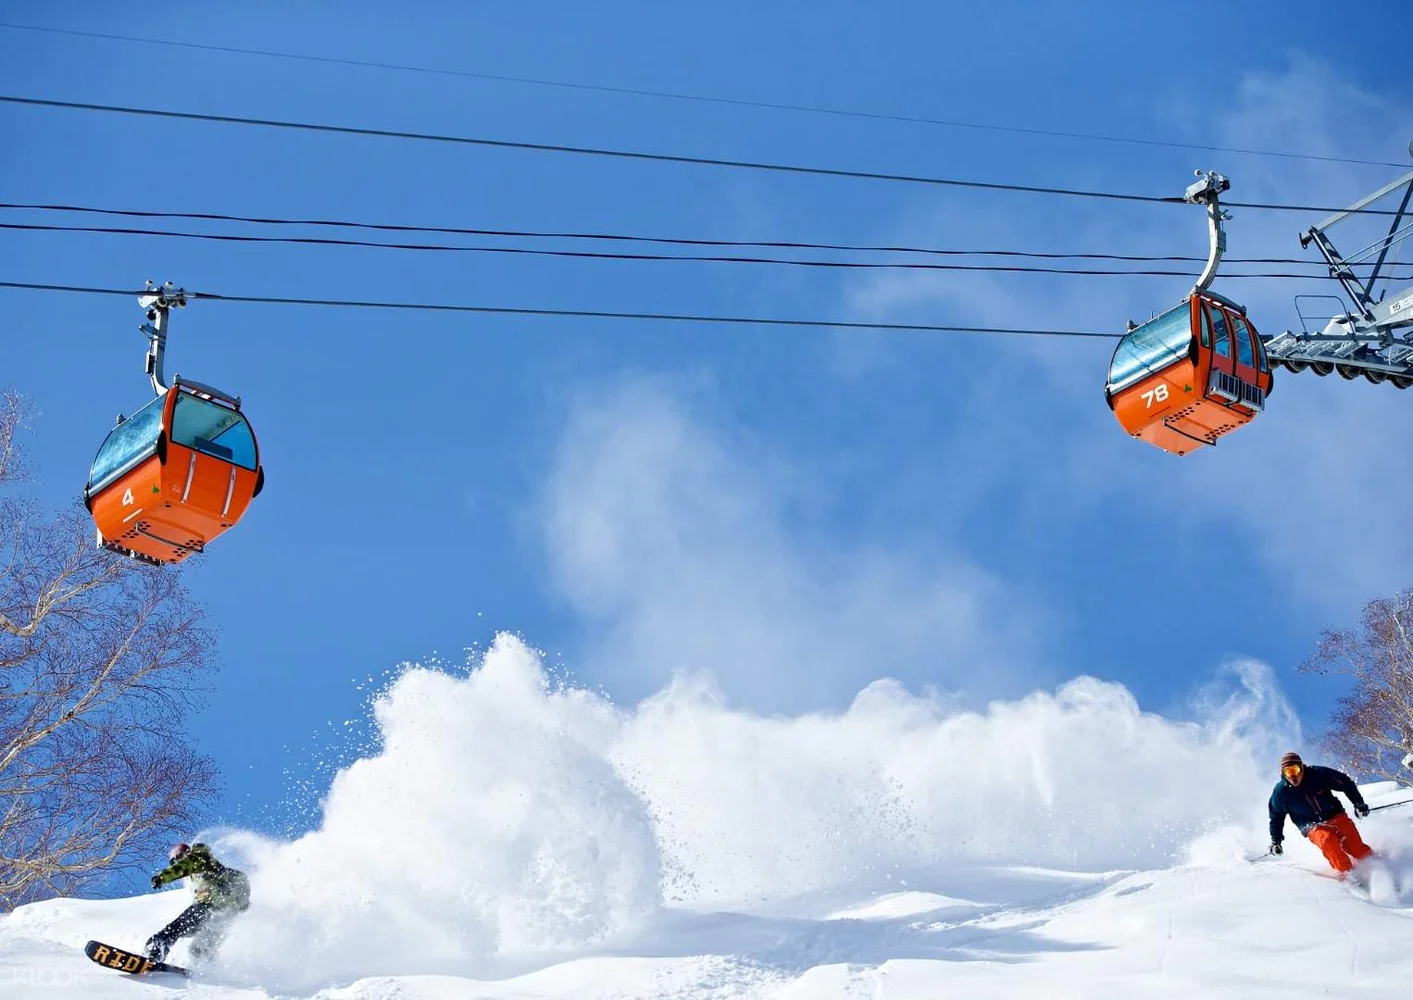 Sapporo Kokusai Ski Resort Packages: Lift Pass + Equipment Rental